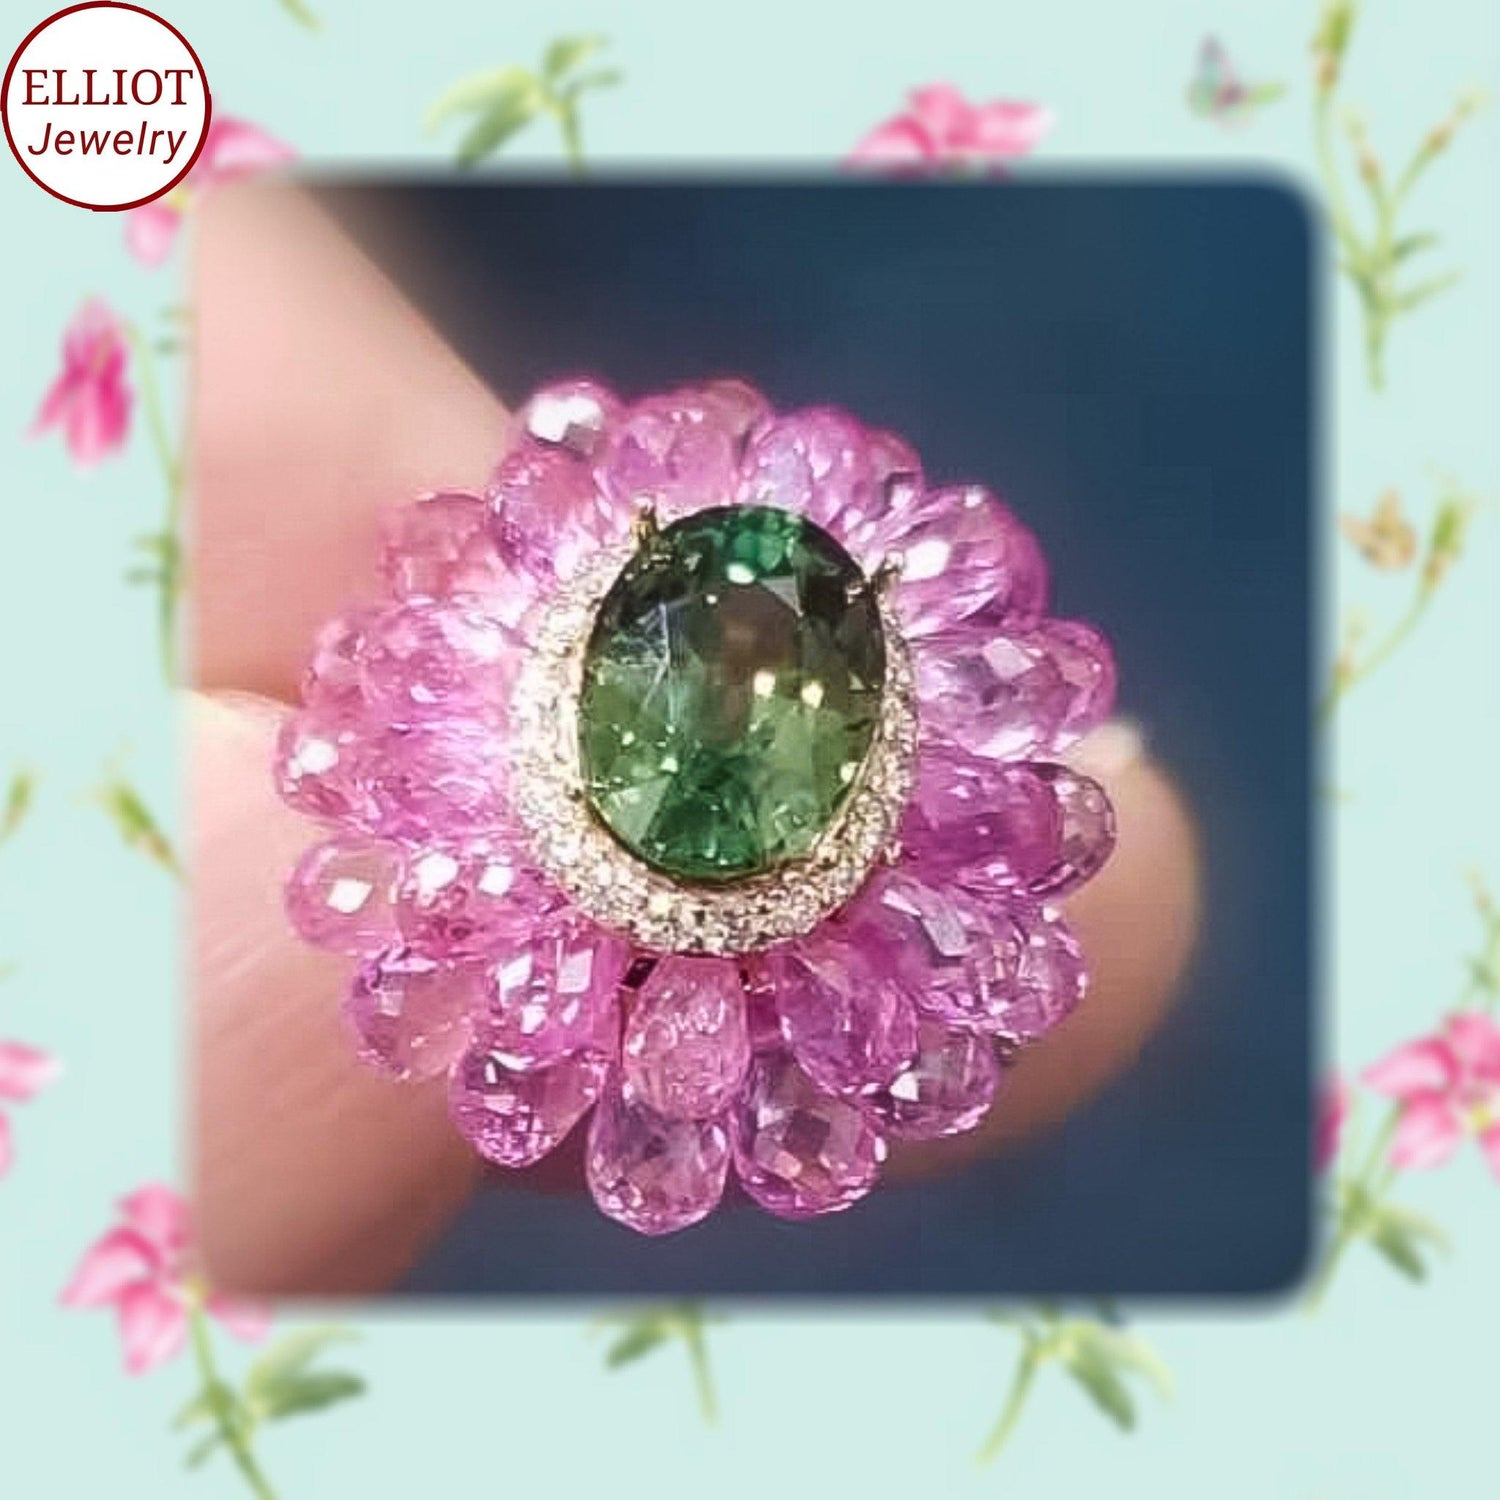 Colorful Gemstone Ring | Elliot Jewelry | Elliot Jewelry